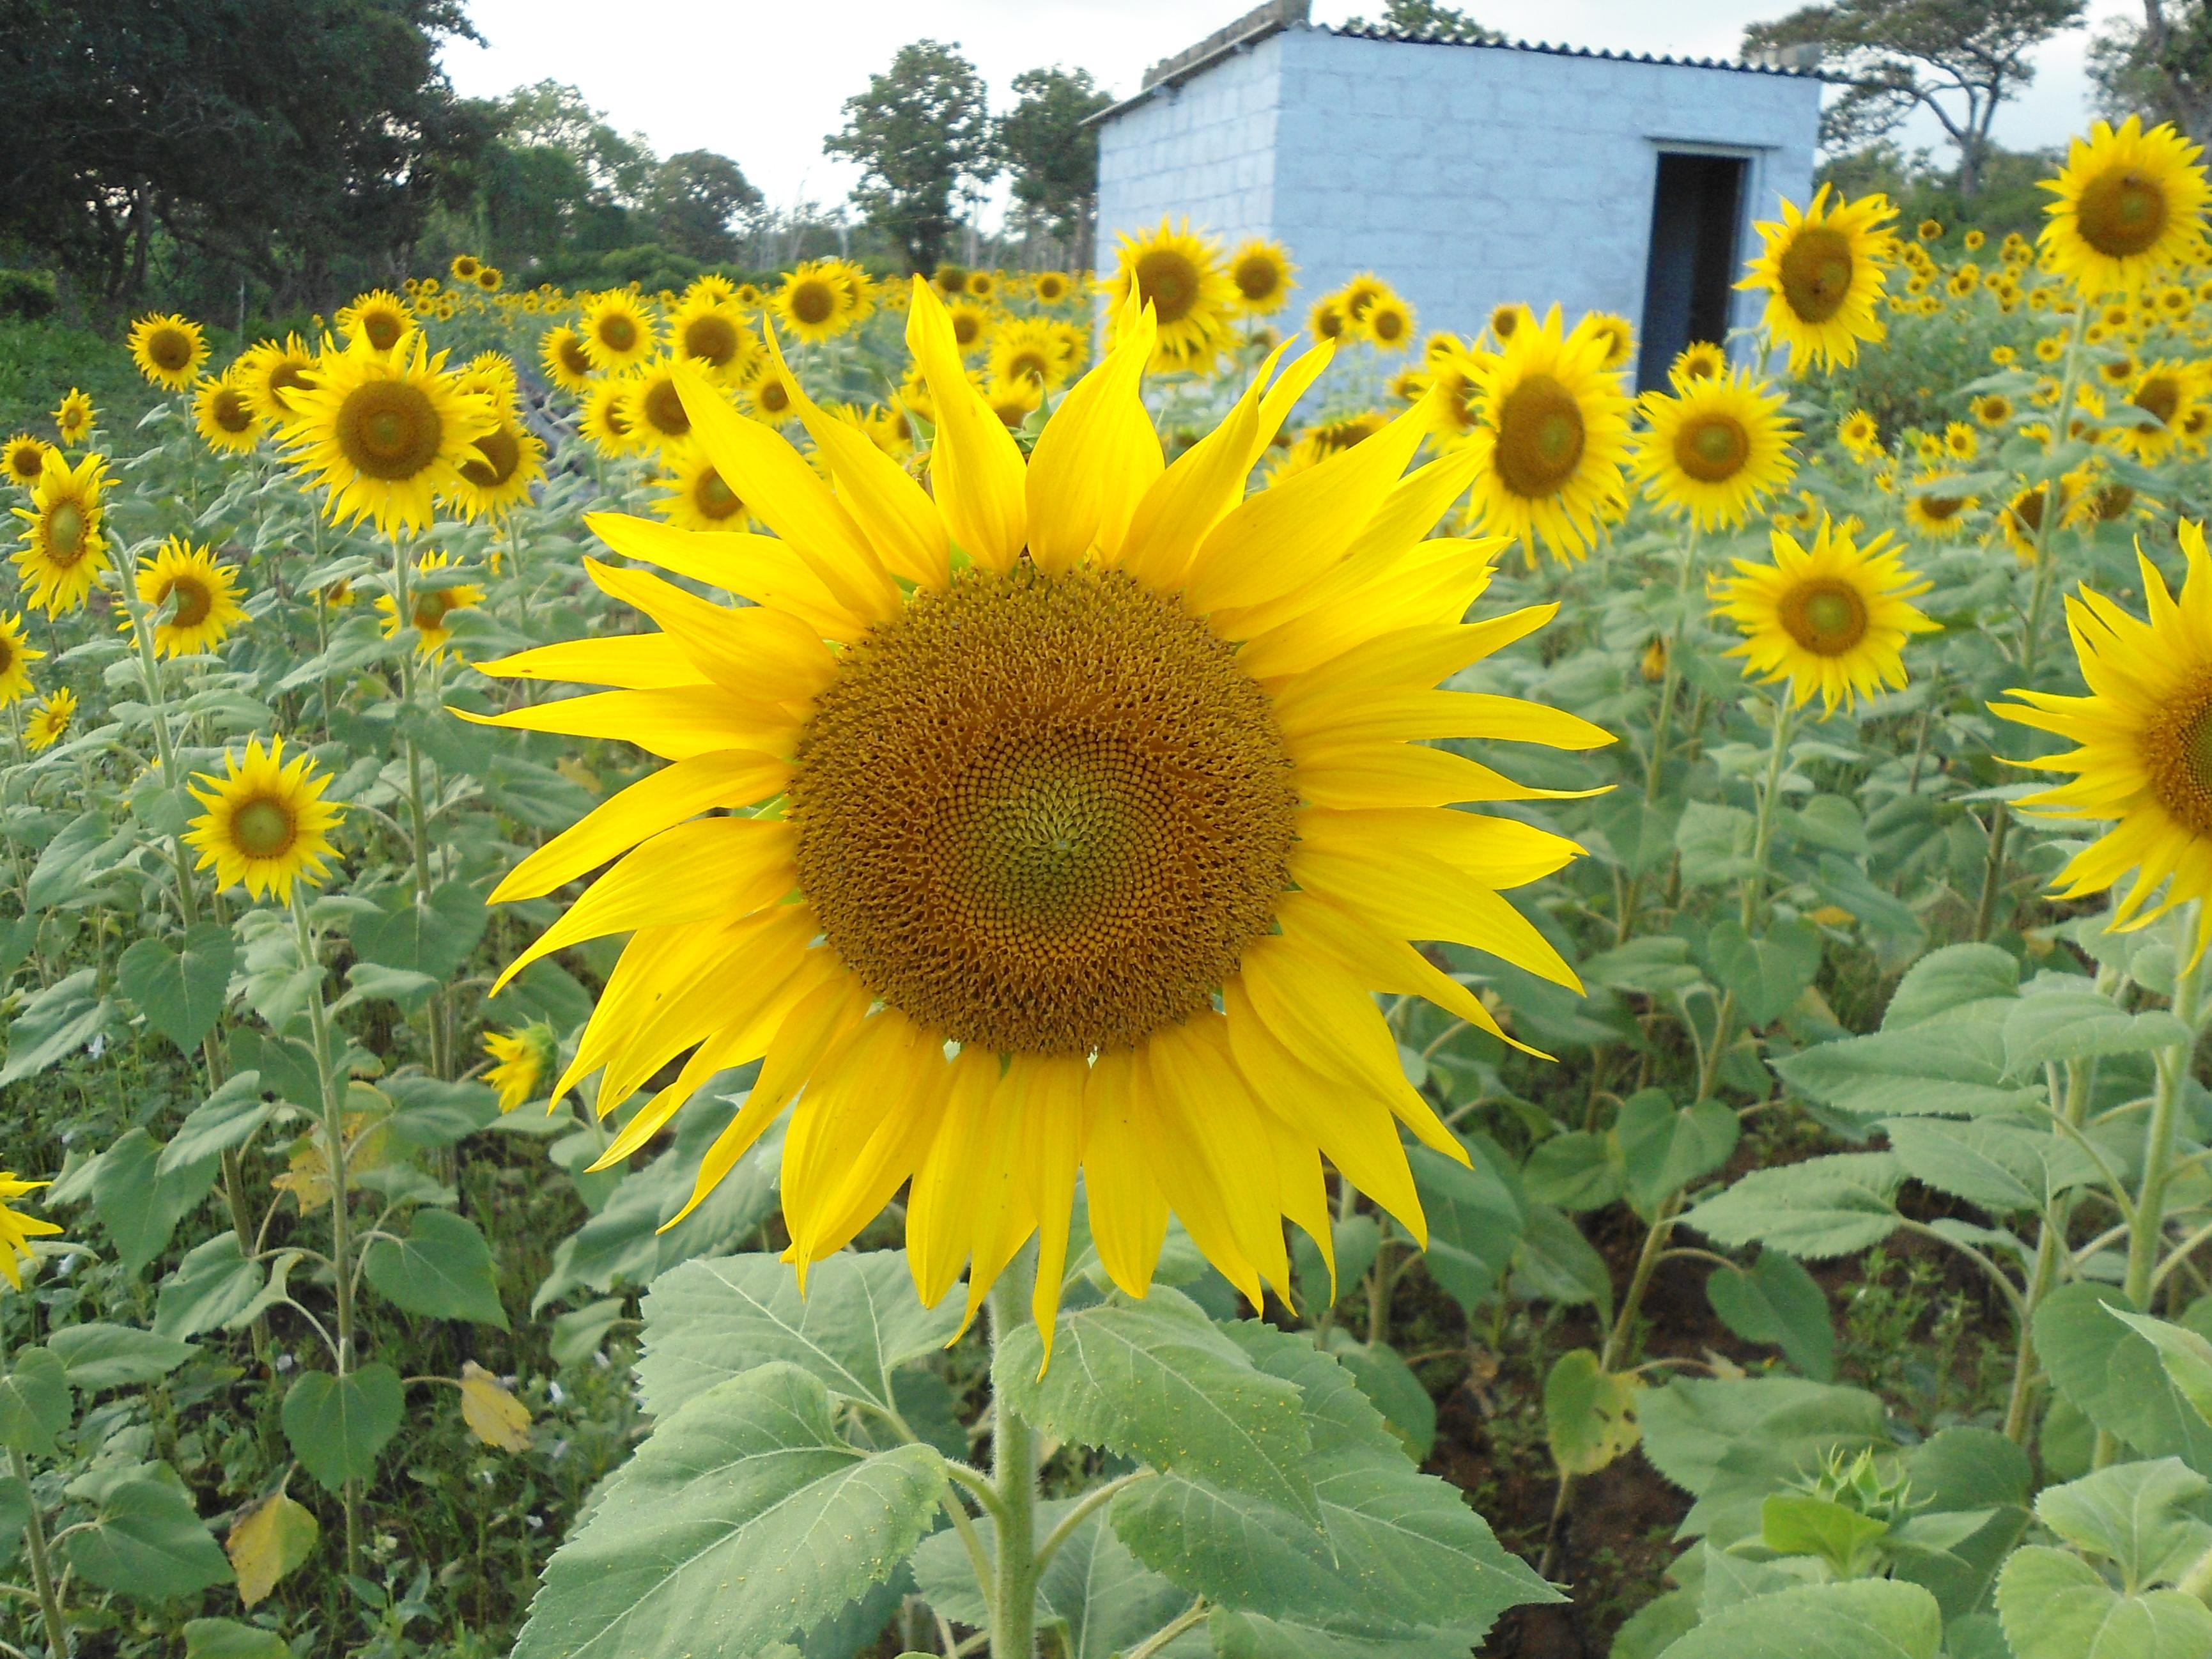 Sunflower in a field of sunflowers